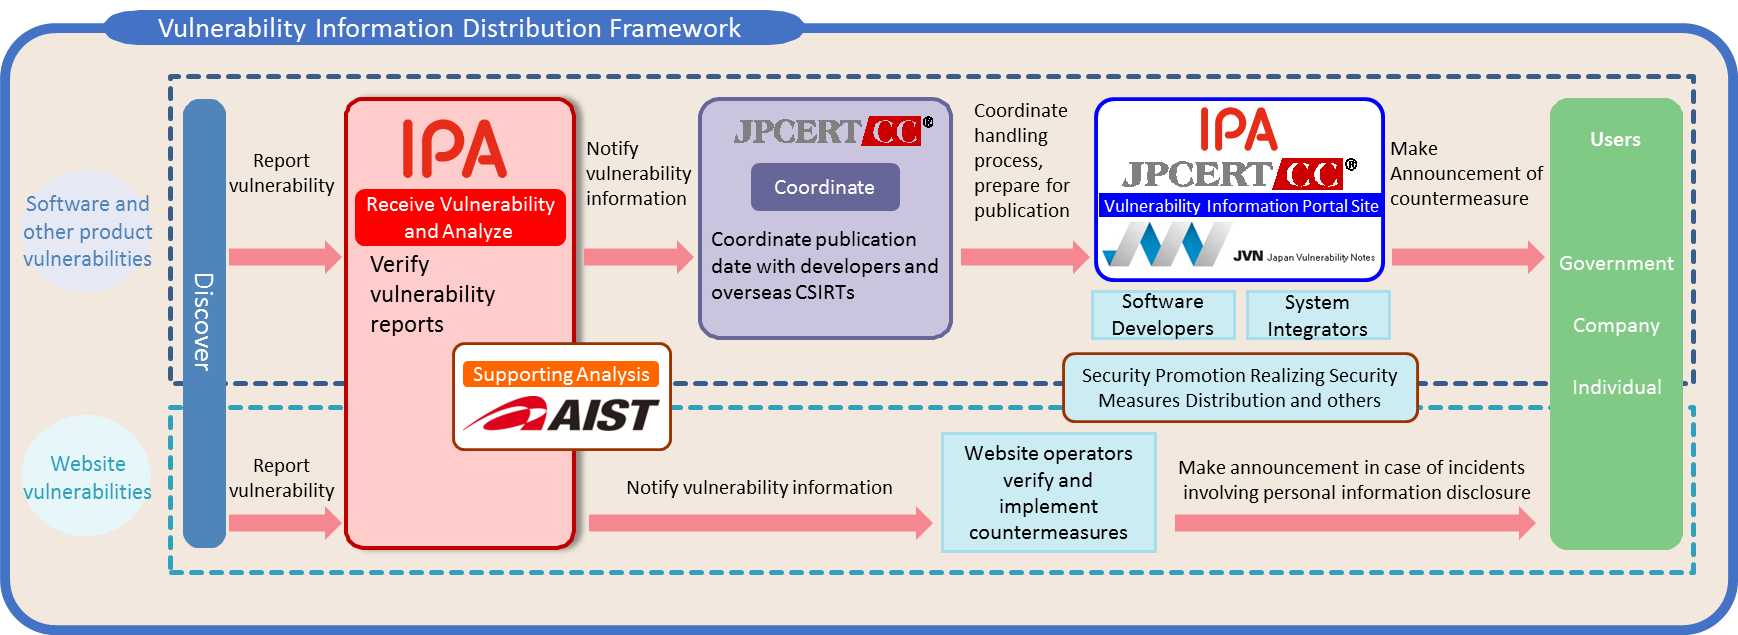 Vulnerability Information Distribution Framework